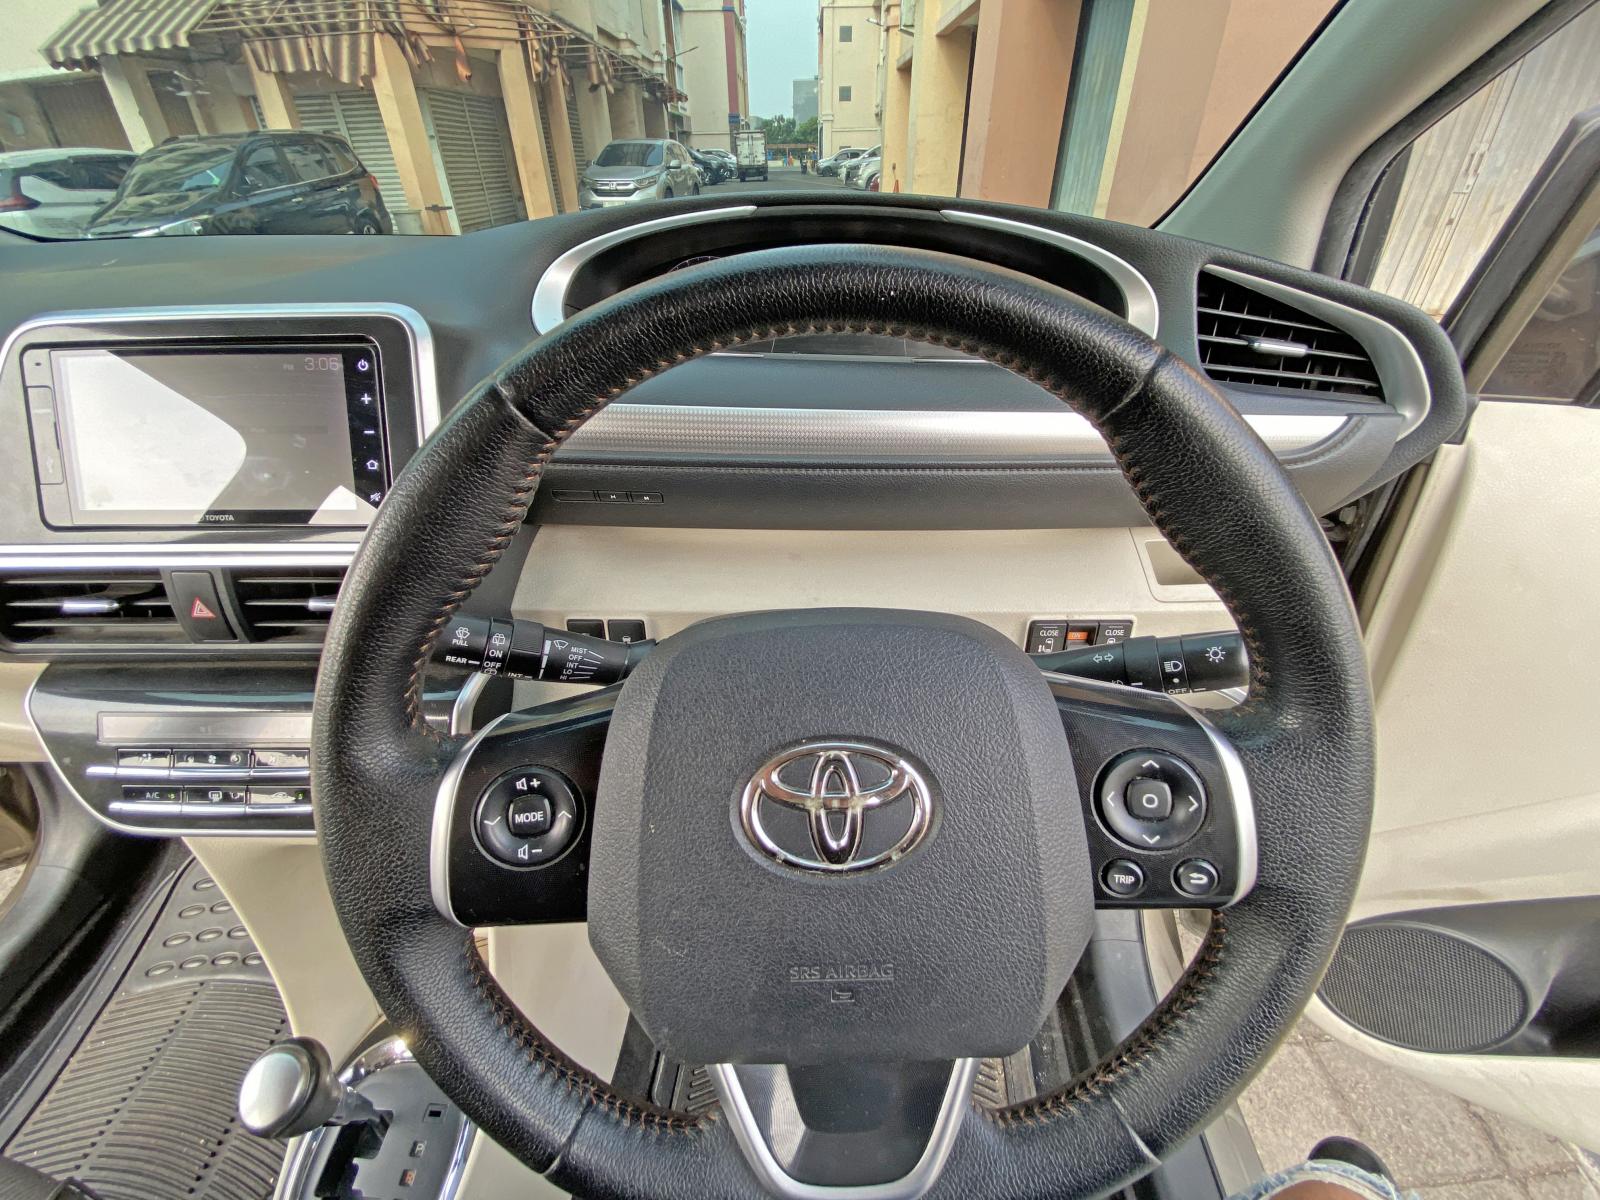 Toyota Sienta Q CVT 2016 dp 0 bs tt motor jd dp